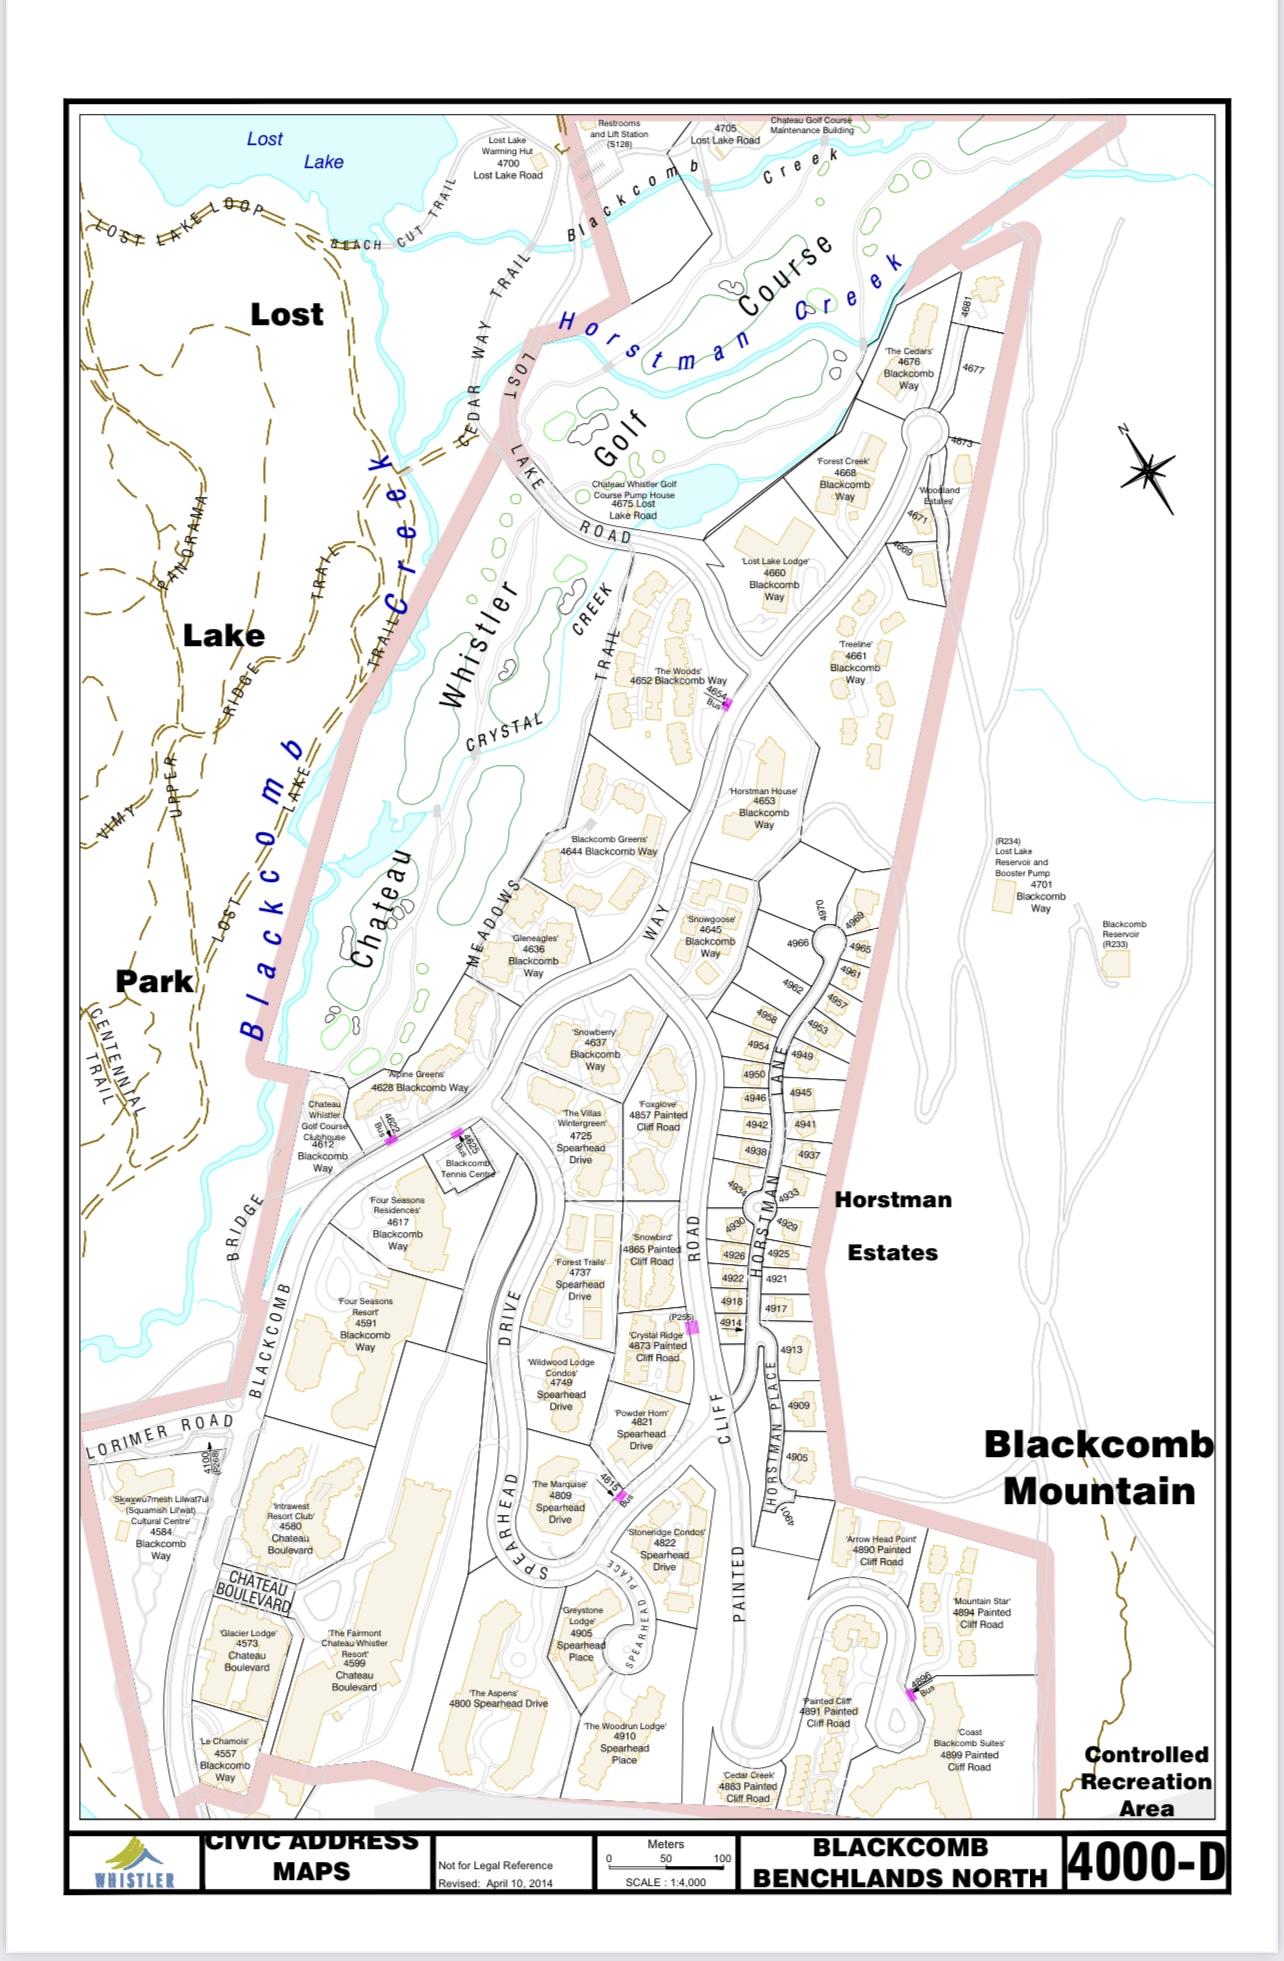 Horstman Estates map of area in Whistler